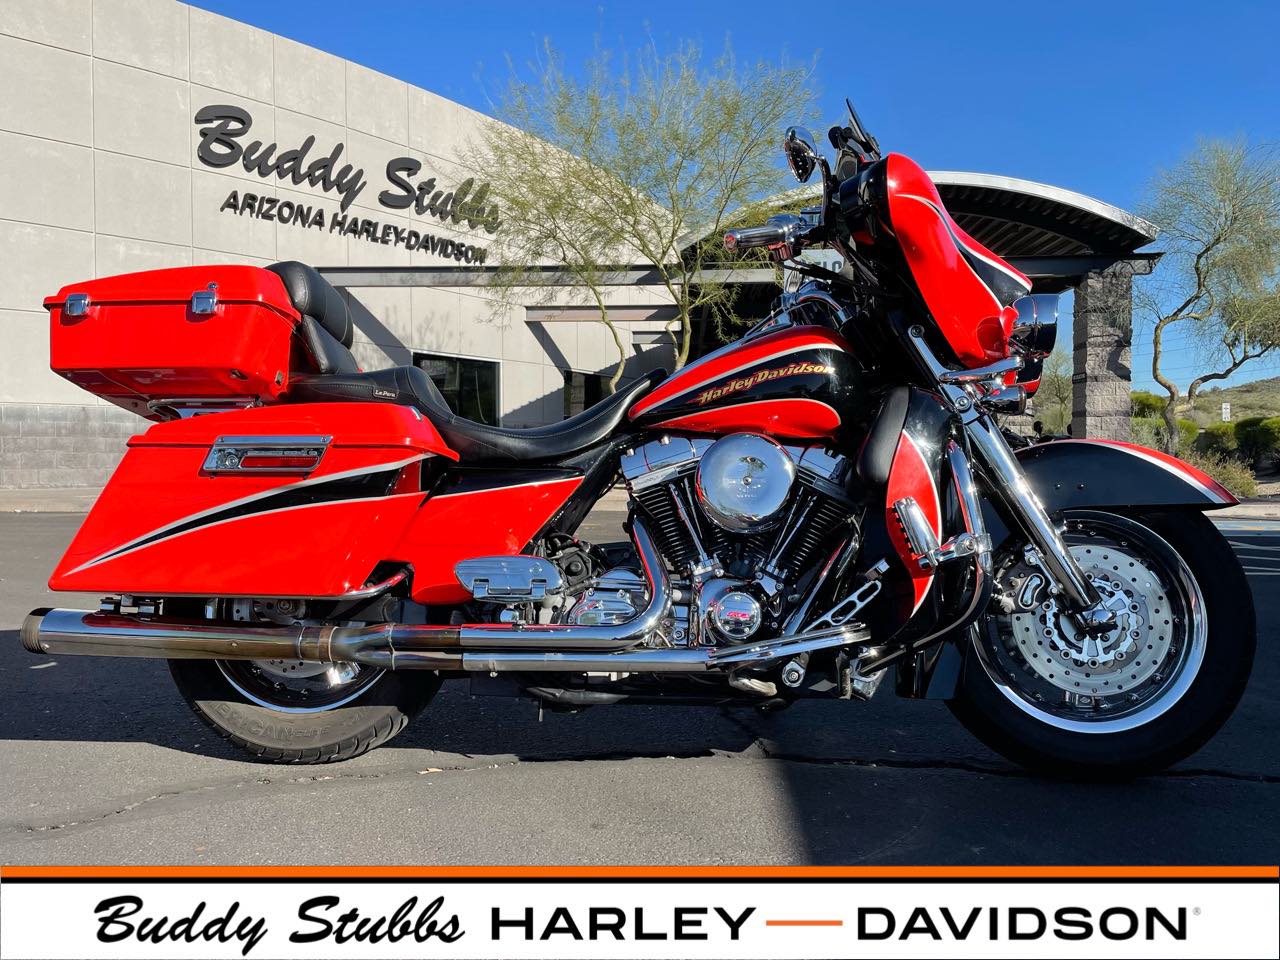 2004 Harley-Davidson FLHTCSE at Buddy Stubbs Arizona Harley-Davidson